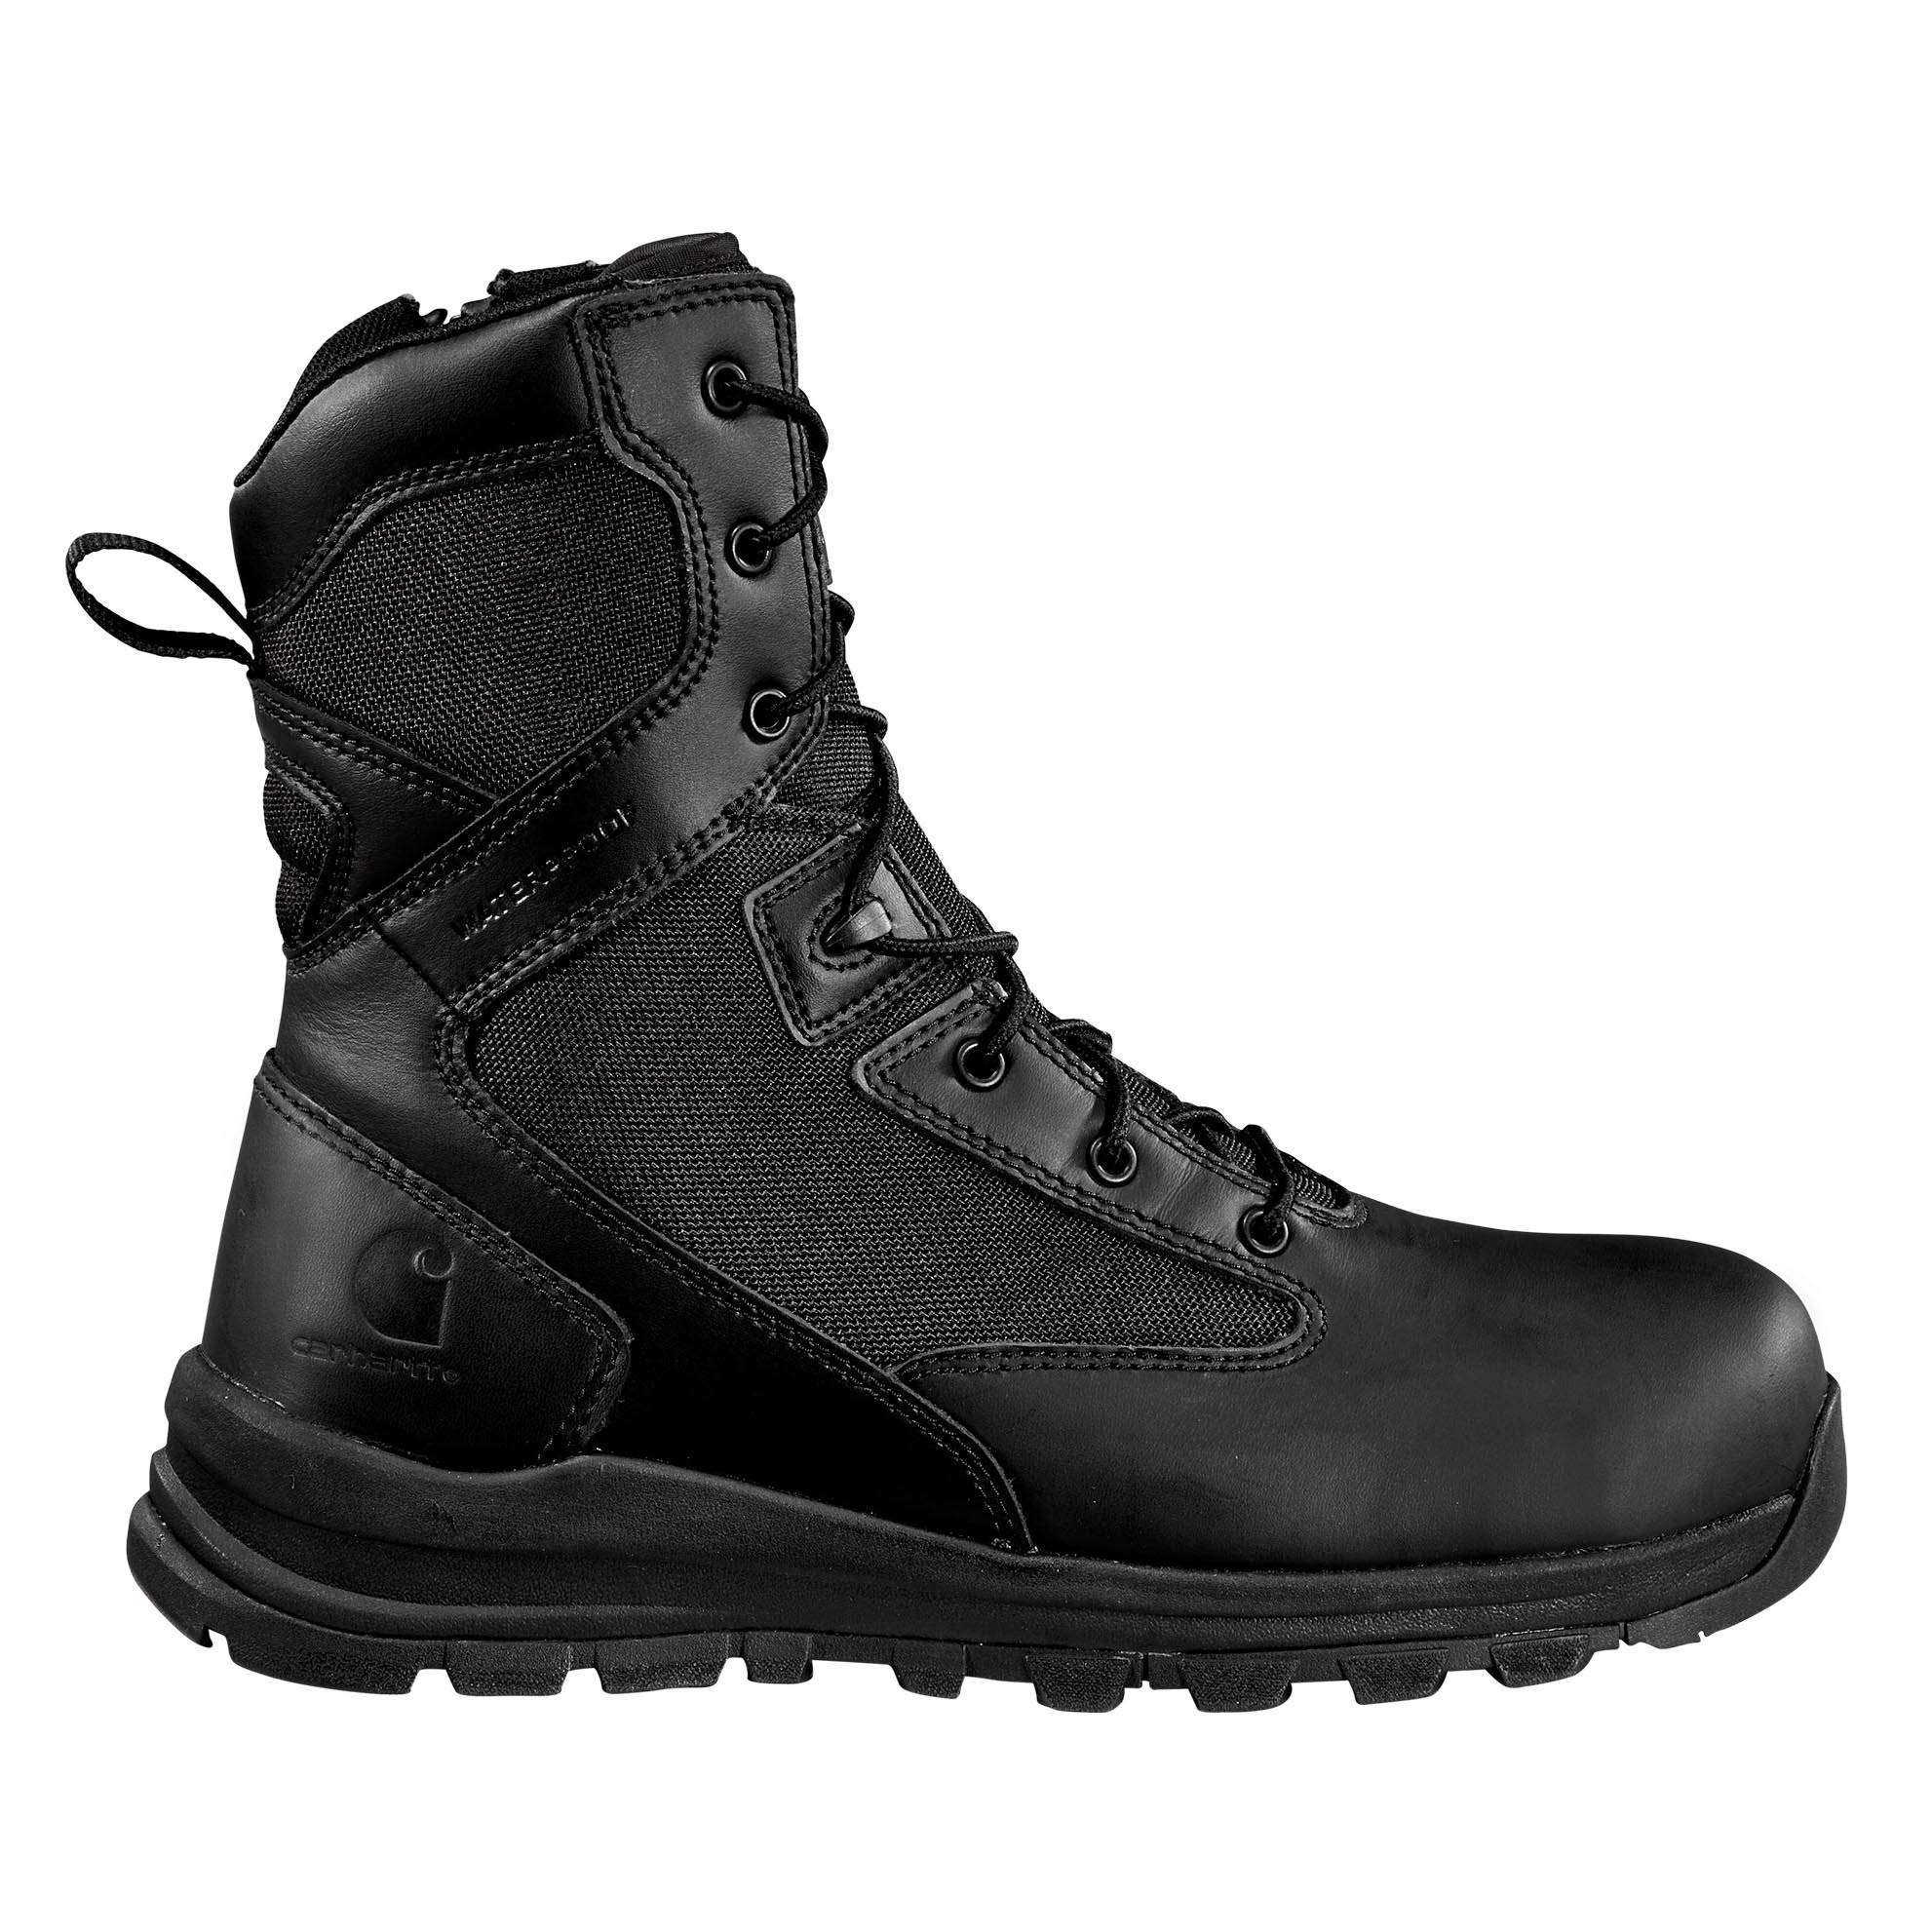 Carhartt Gilmore Waterproof 8" Side-Zip Safety Toe Boots